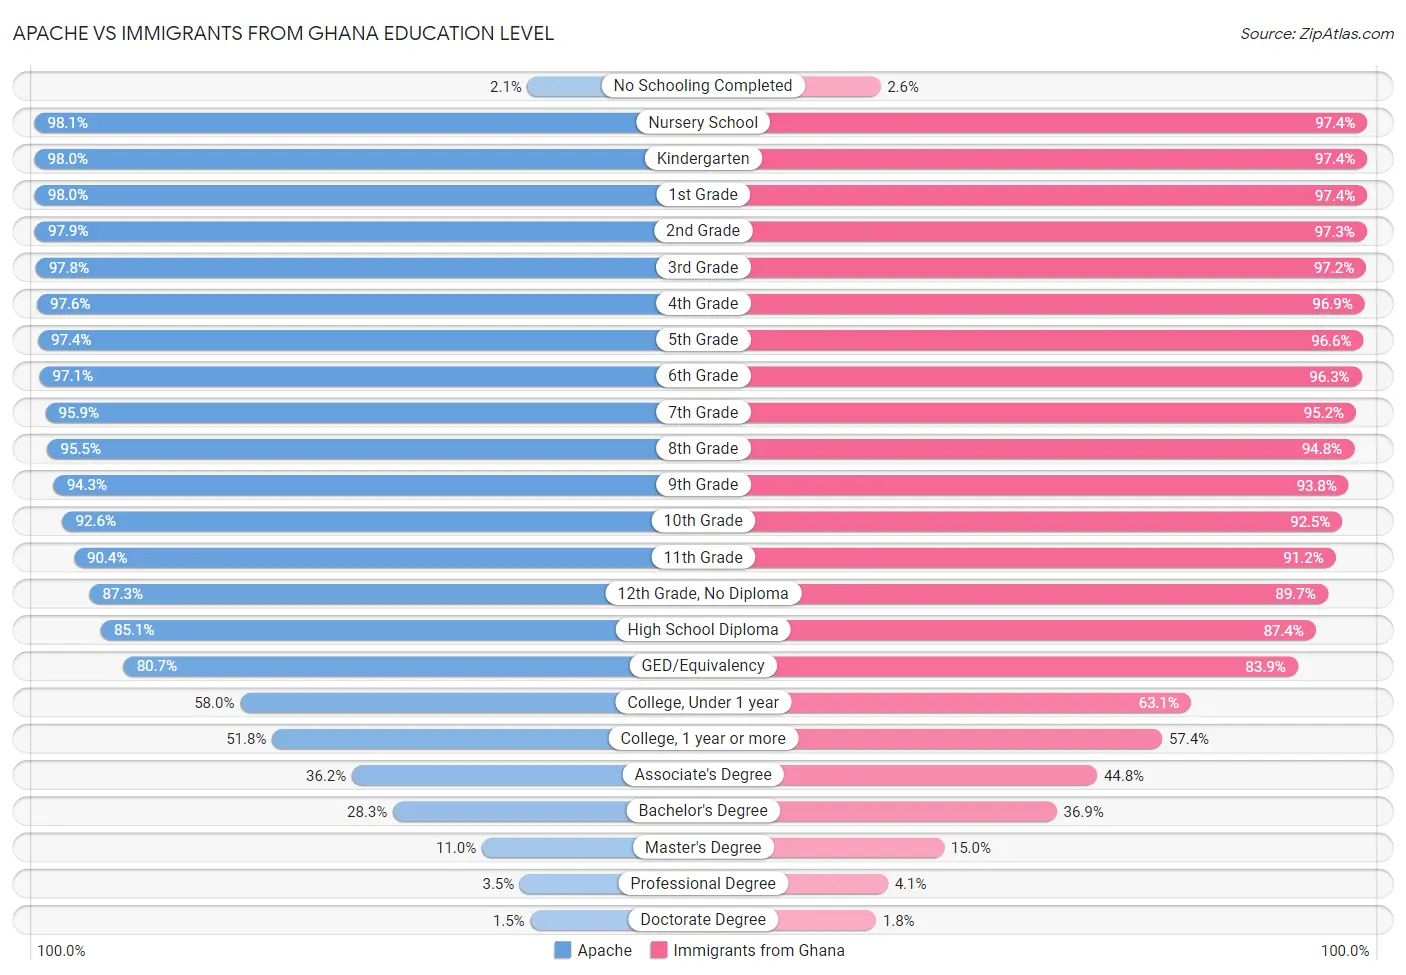 Apache vs Immigrants from Ghana Education Level